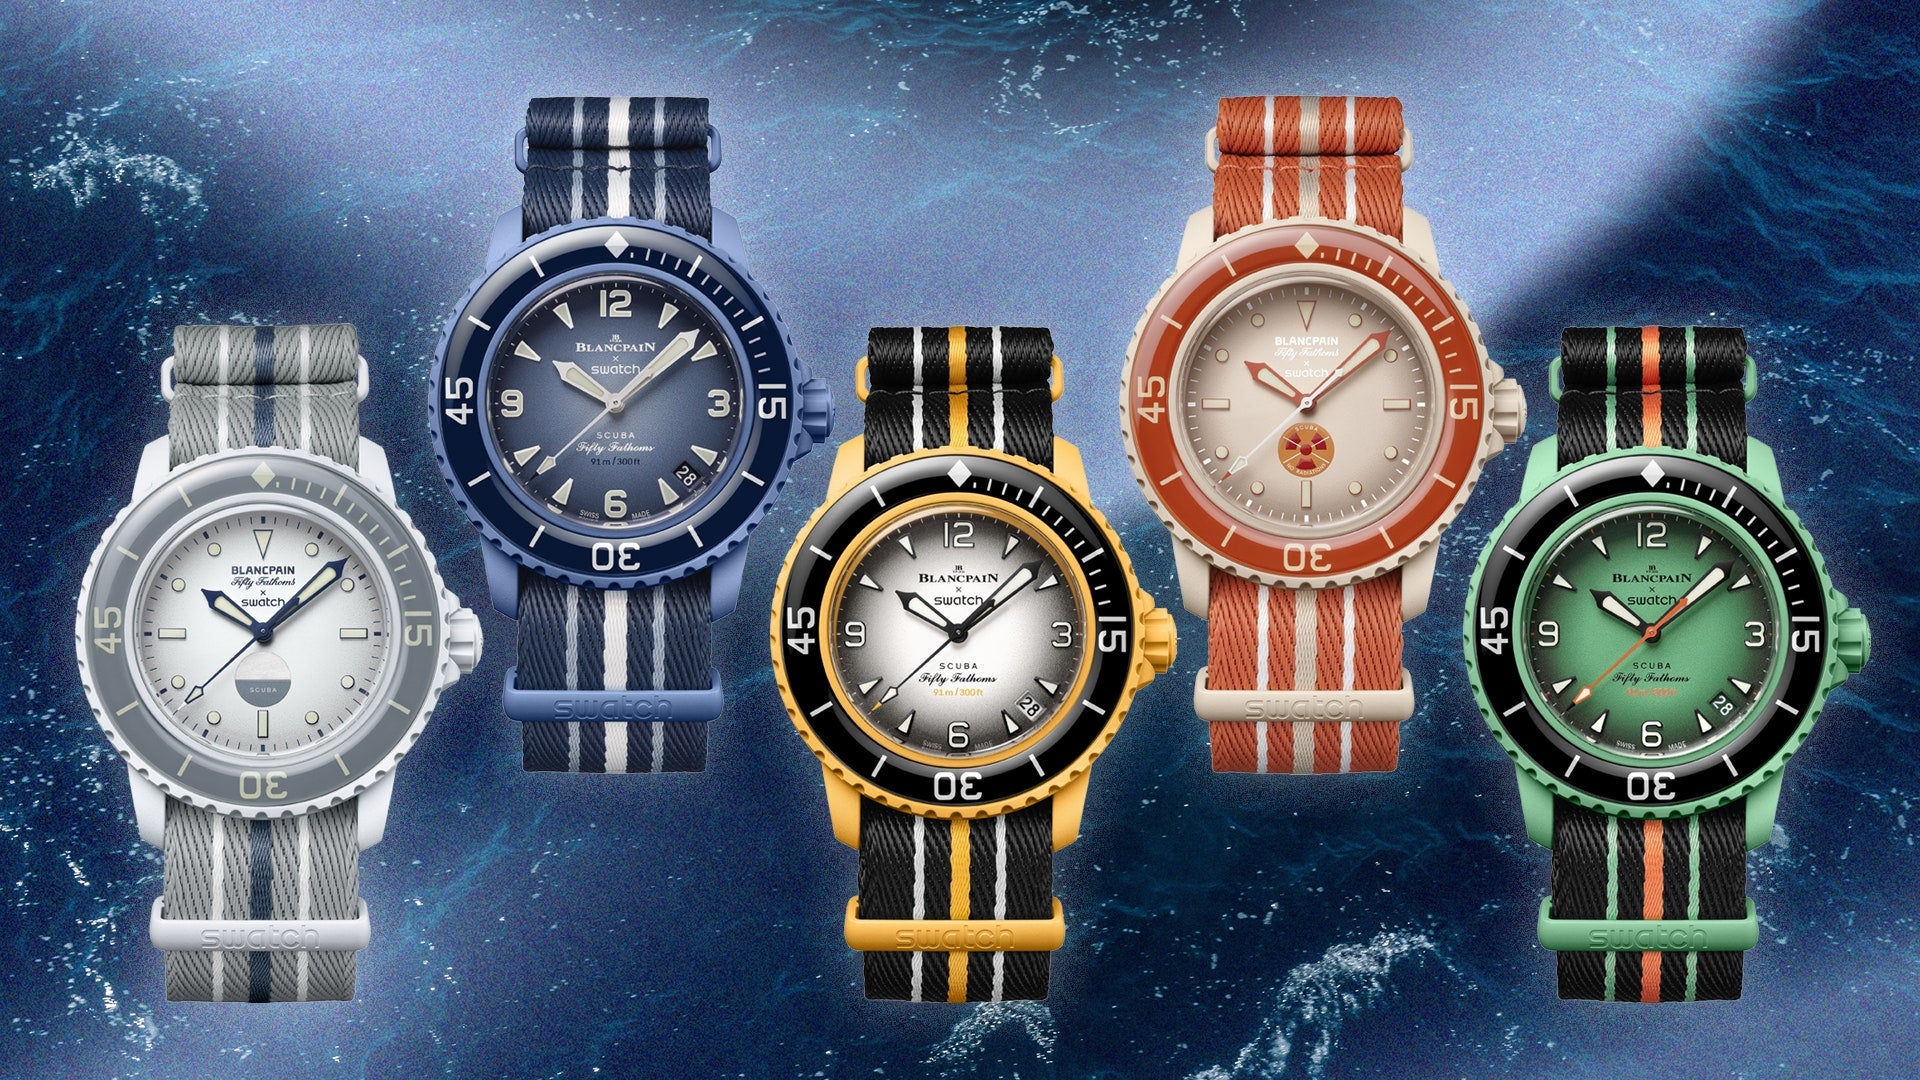 Swatch x Blancpain 海洋主題合作。特色包含以五大洋命名的手錶。